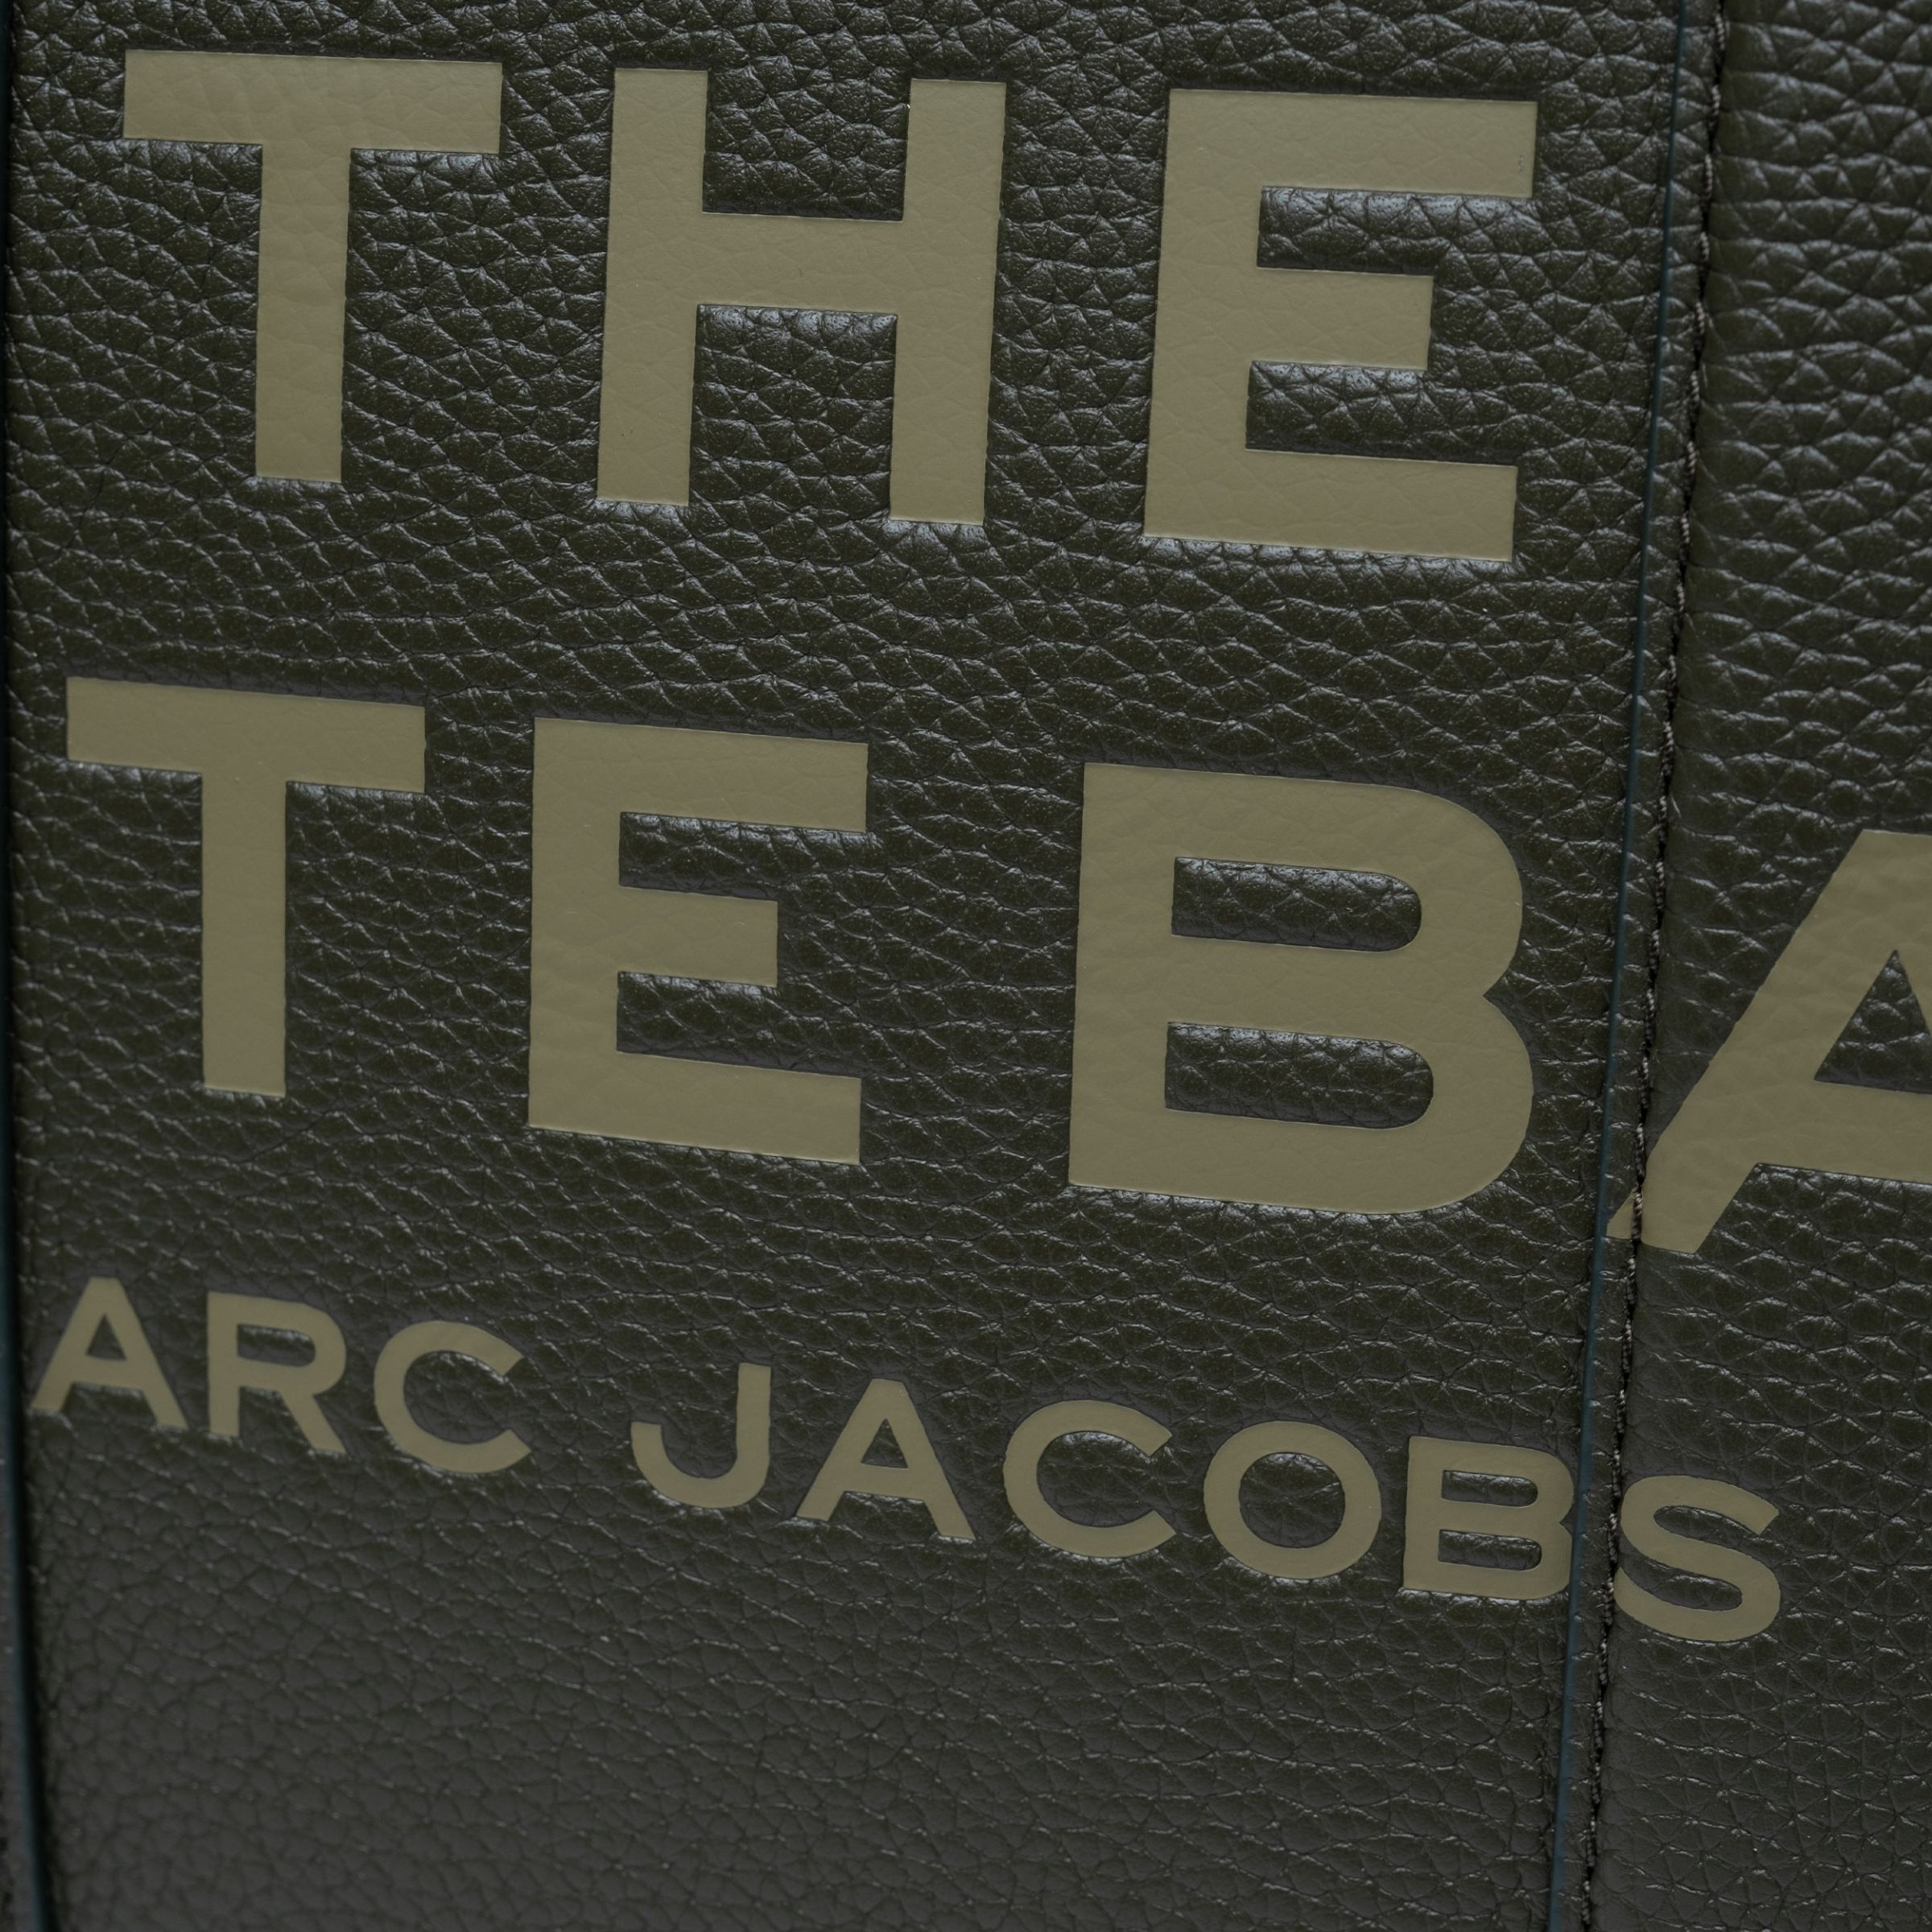 Сумка Marc Jacobs Small Tote Bag оливкова